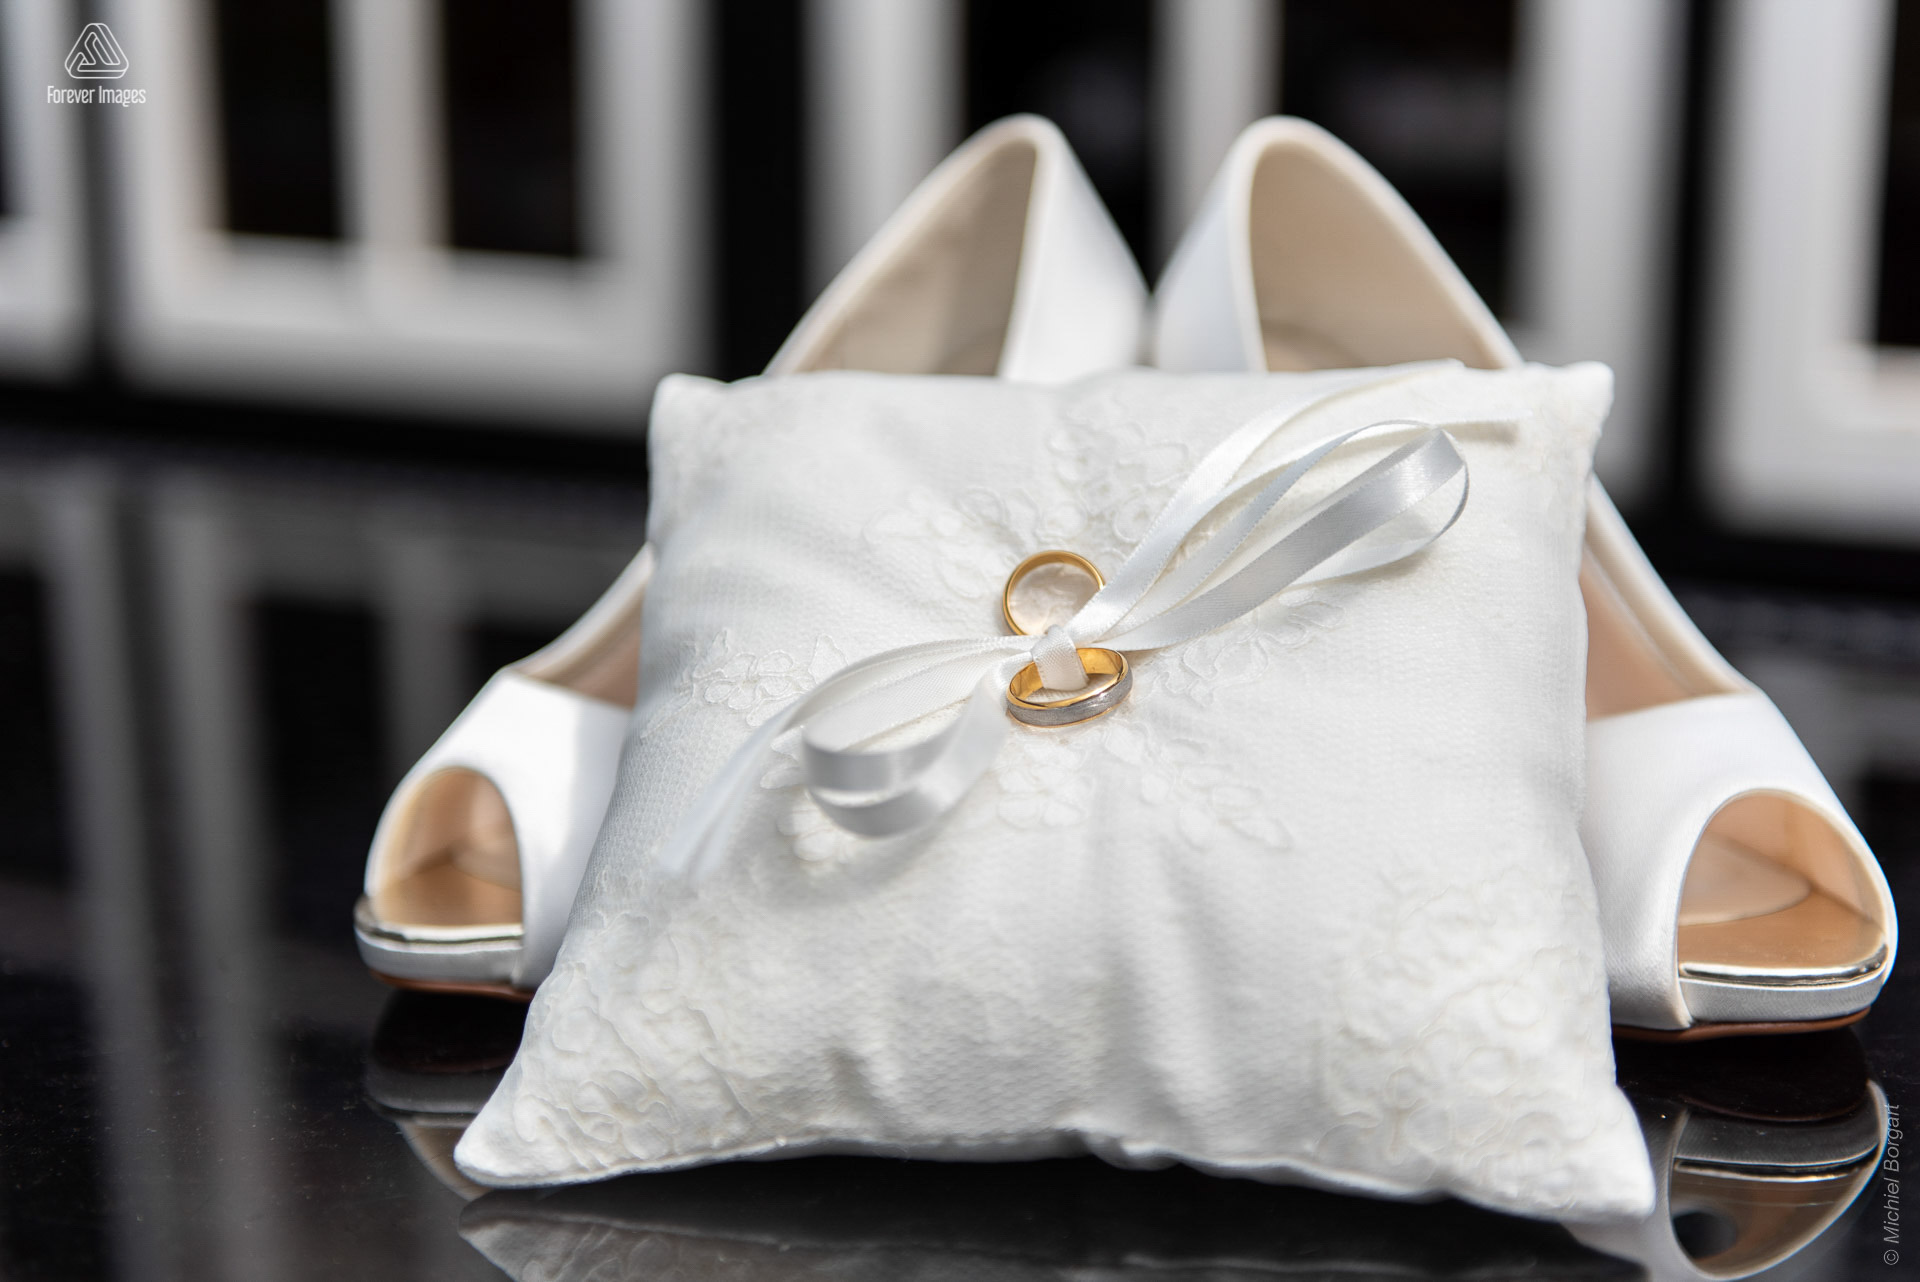 Detailfoto bruidsfoto trouwfoto bruidsschoenen ringenkussentje ringen | Bruidsfotograaf Michiel Borgart - Forever Images.